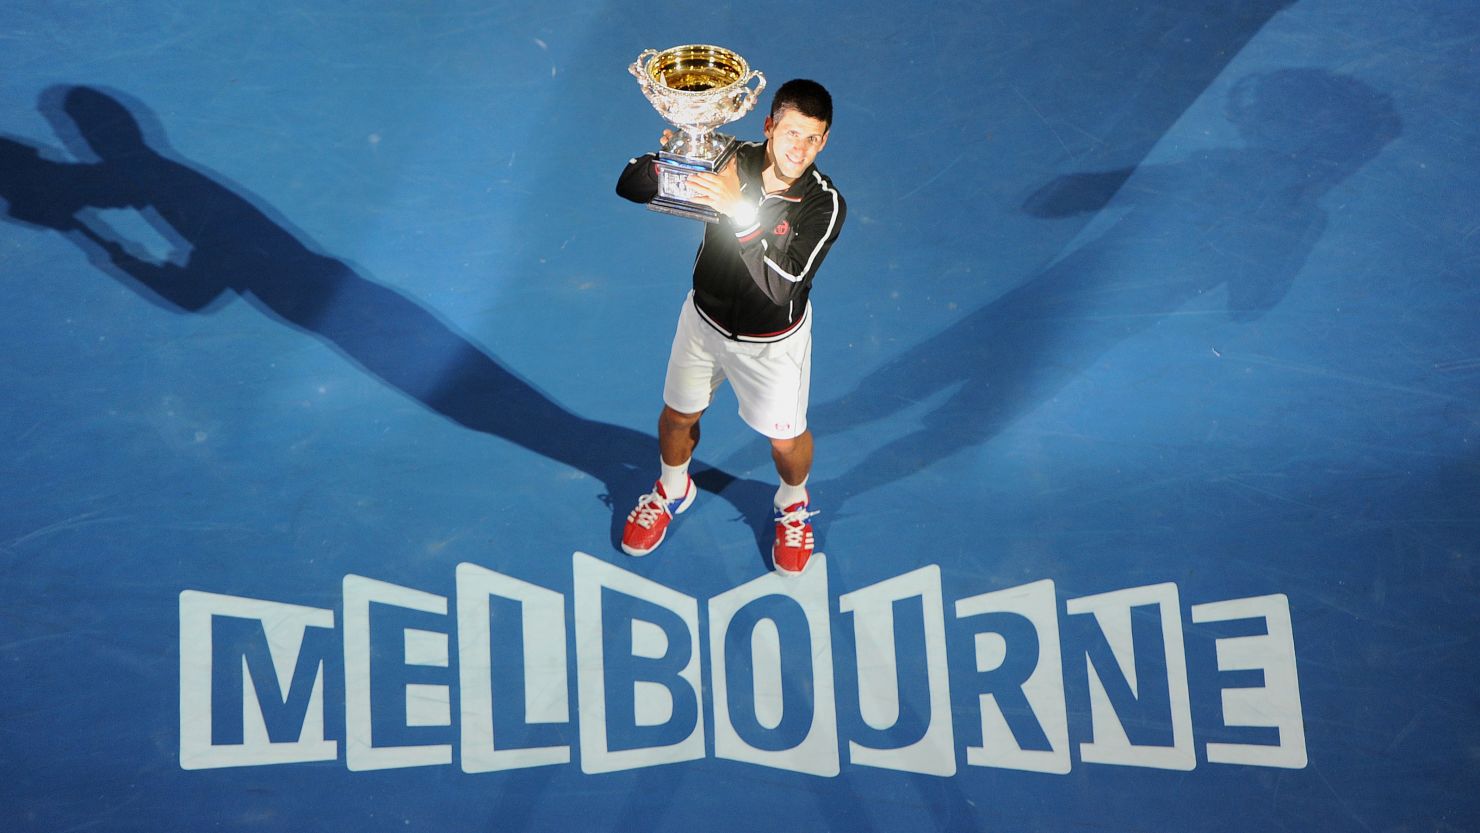 Serbia's Novak Djokovic won the 2012 Australian Open, beating Spain's Rafael Nadal in the final.